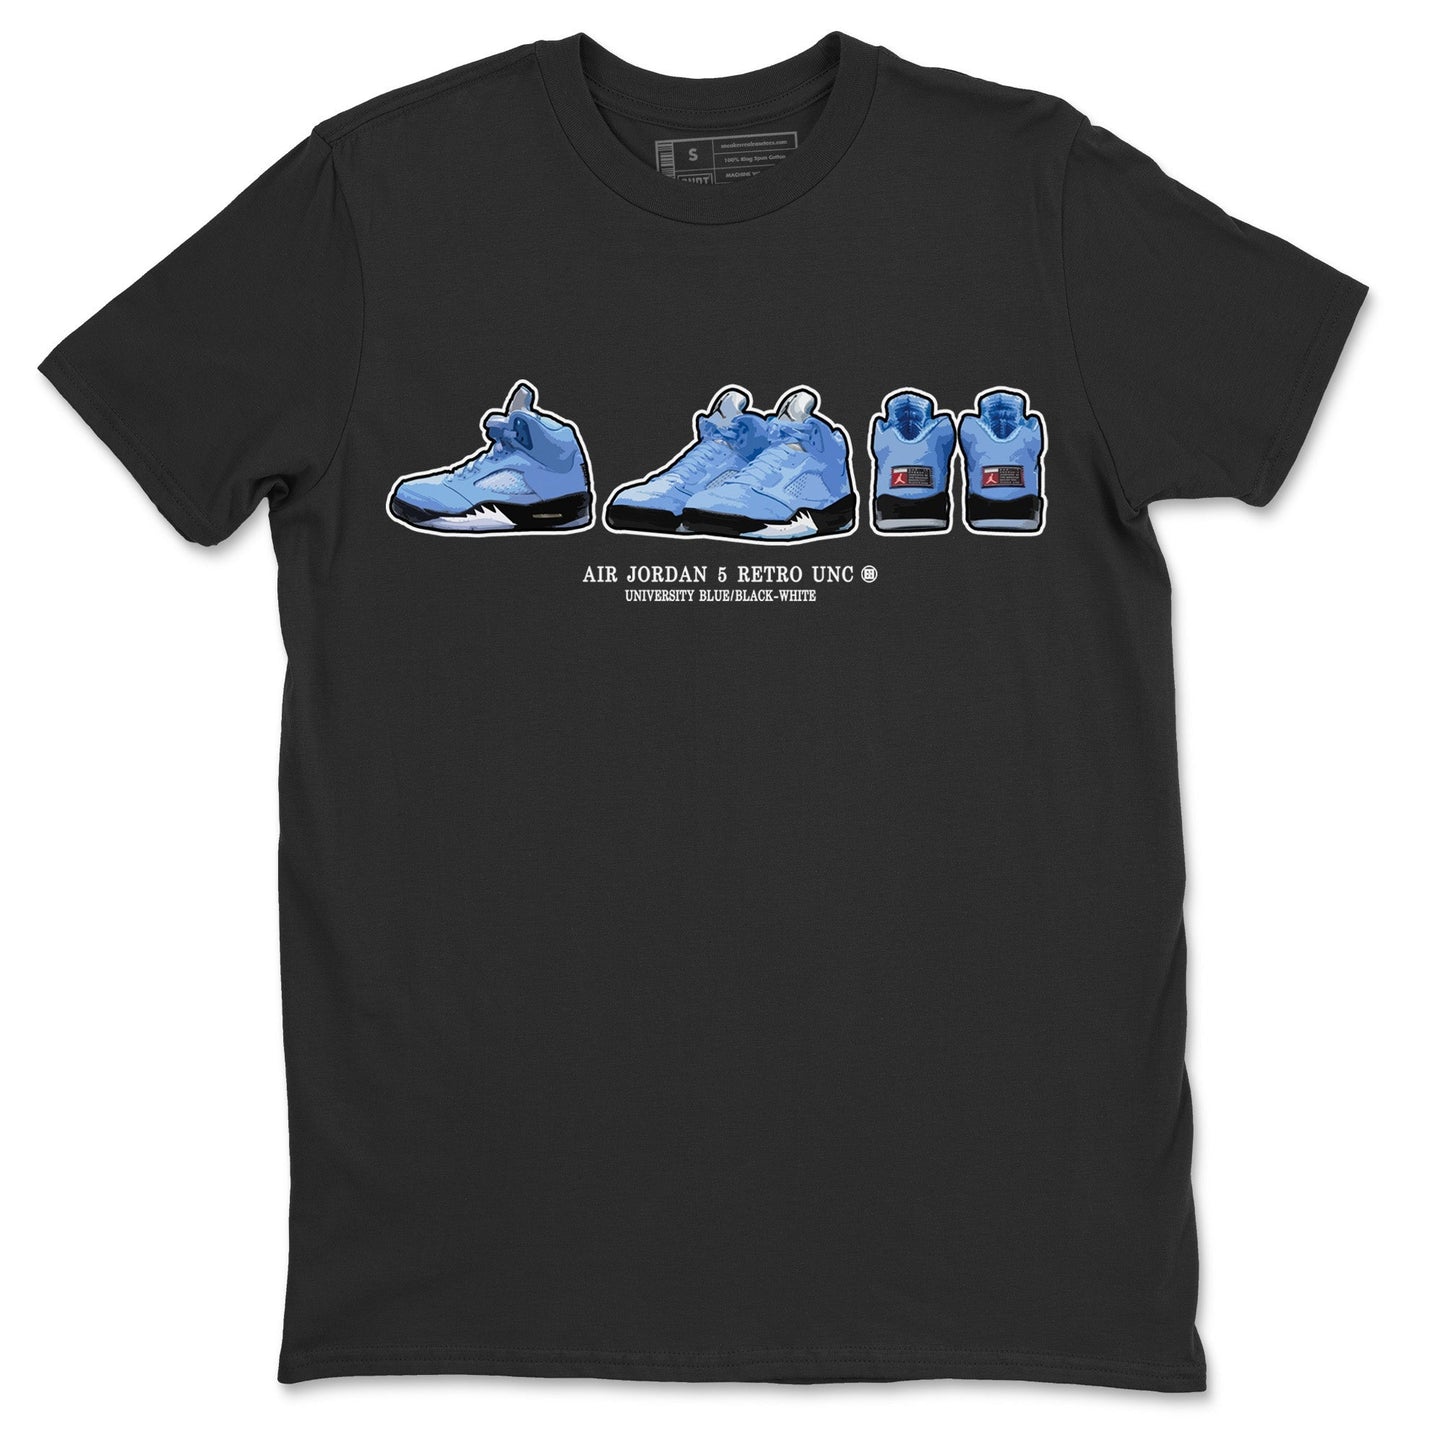 Air Jordan 5 UNC Shirt To Match Jordans Sneaker Prelude Sneaker Tees Air Jordan 5 Retro UNC Drip Gear Zone Sneaker Matching Clothing Unisex Shirts Black 2